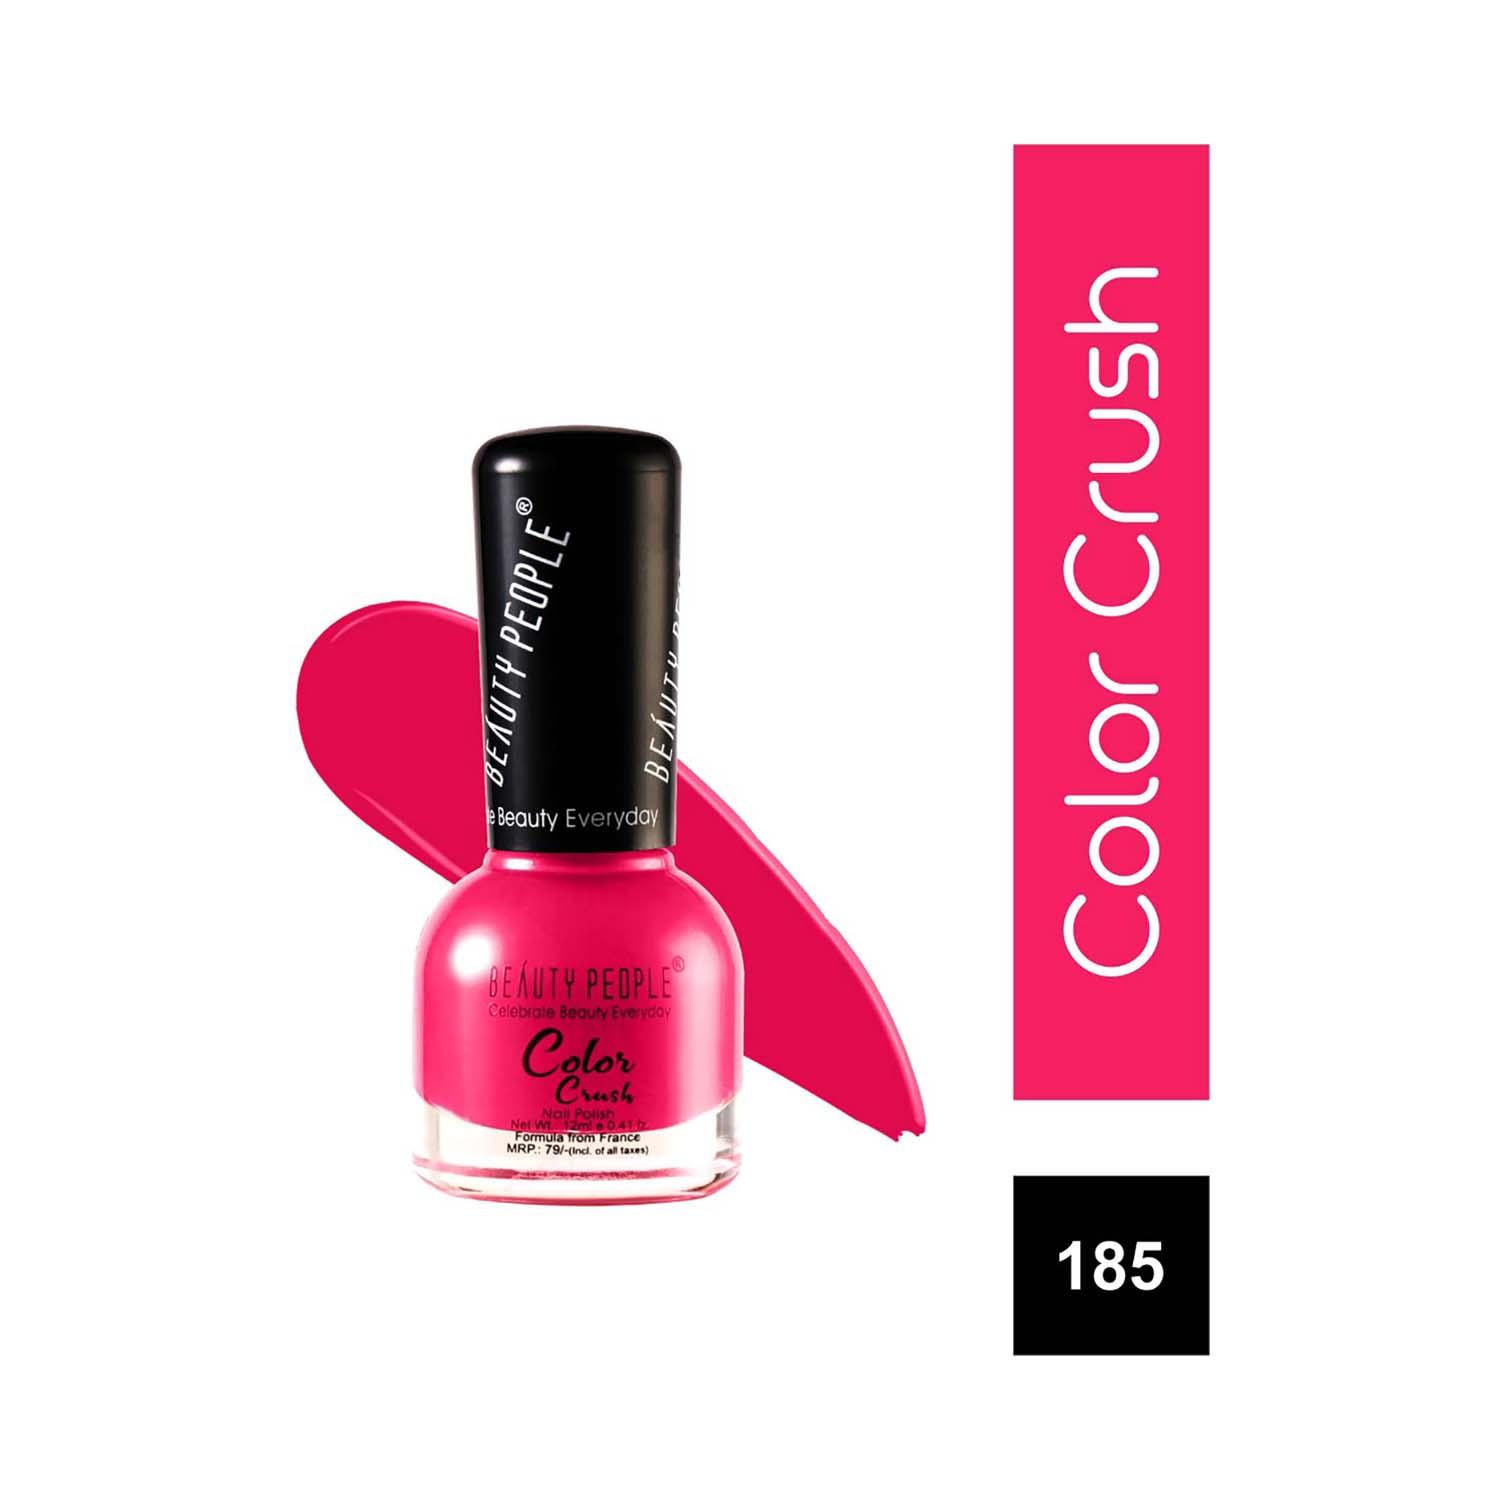 Beauty People | Beauty People Color Crush Nail Polish - 185 Pretty Pink (12ml)